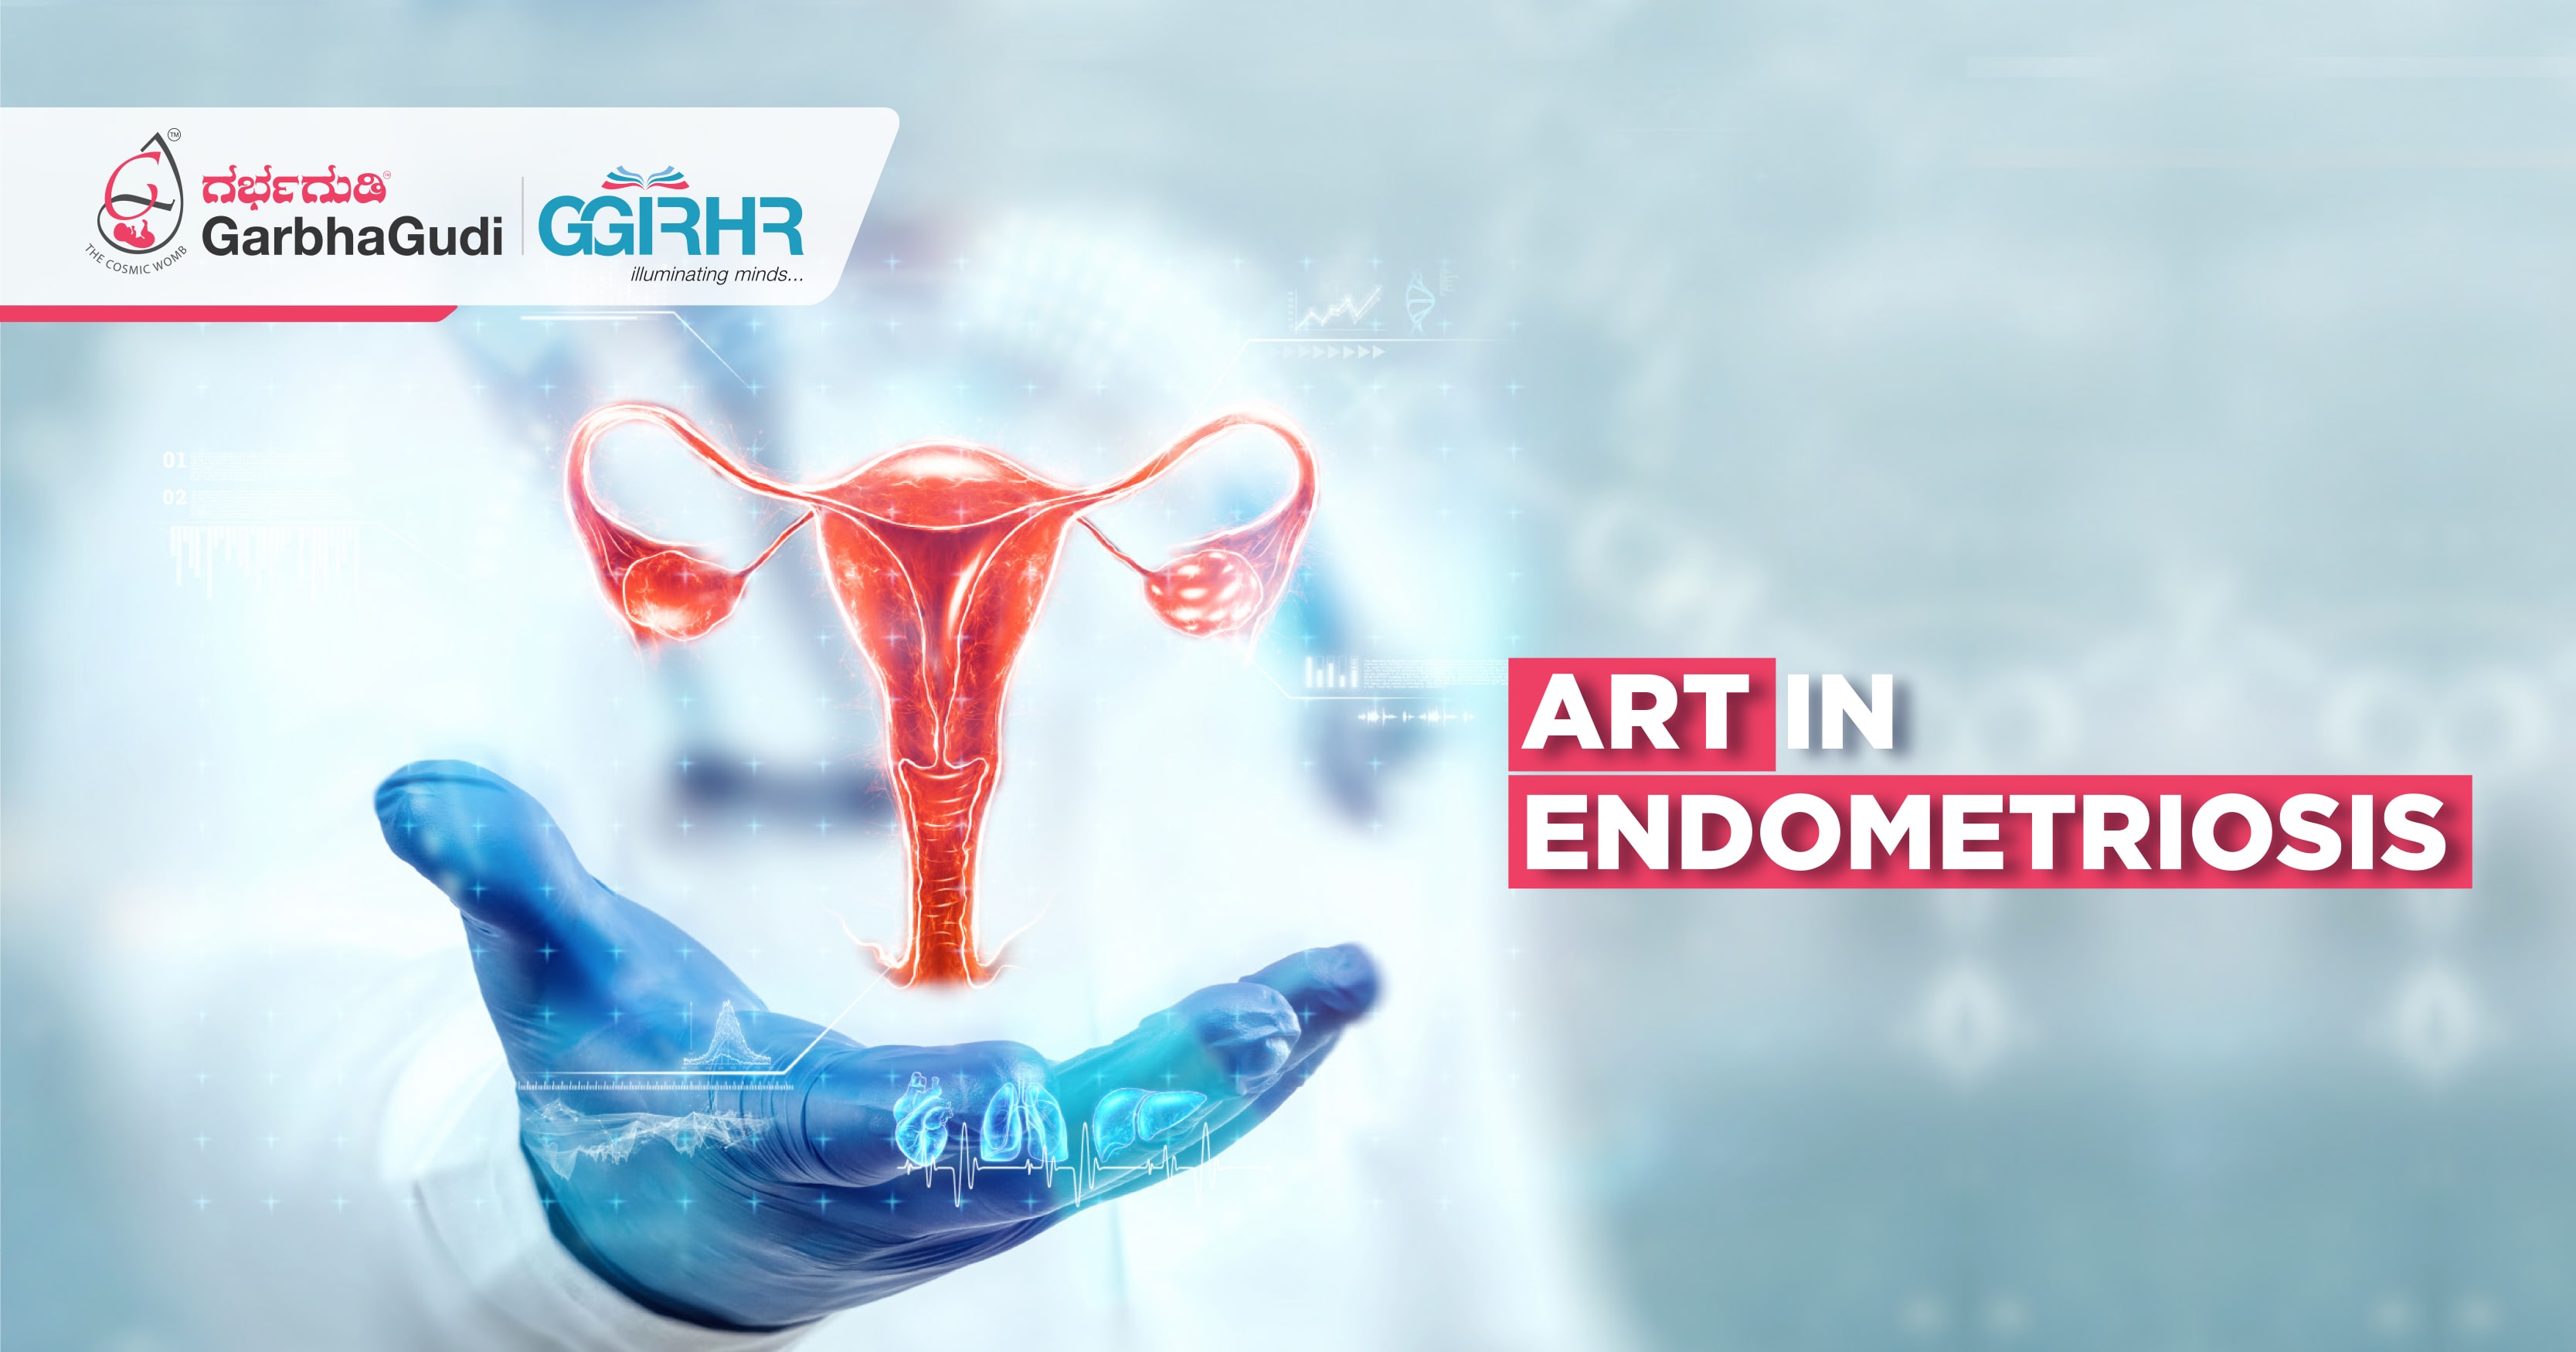 ART in Endometriosis